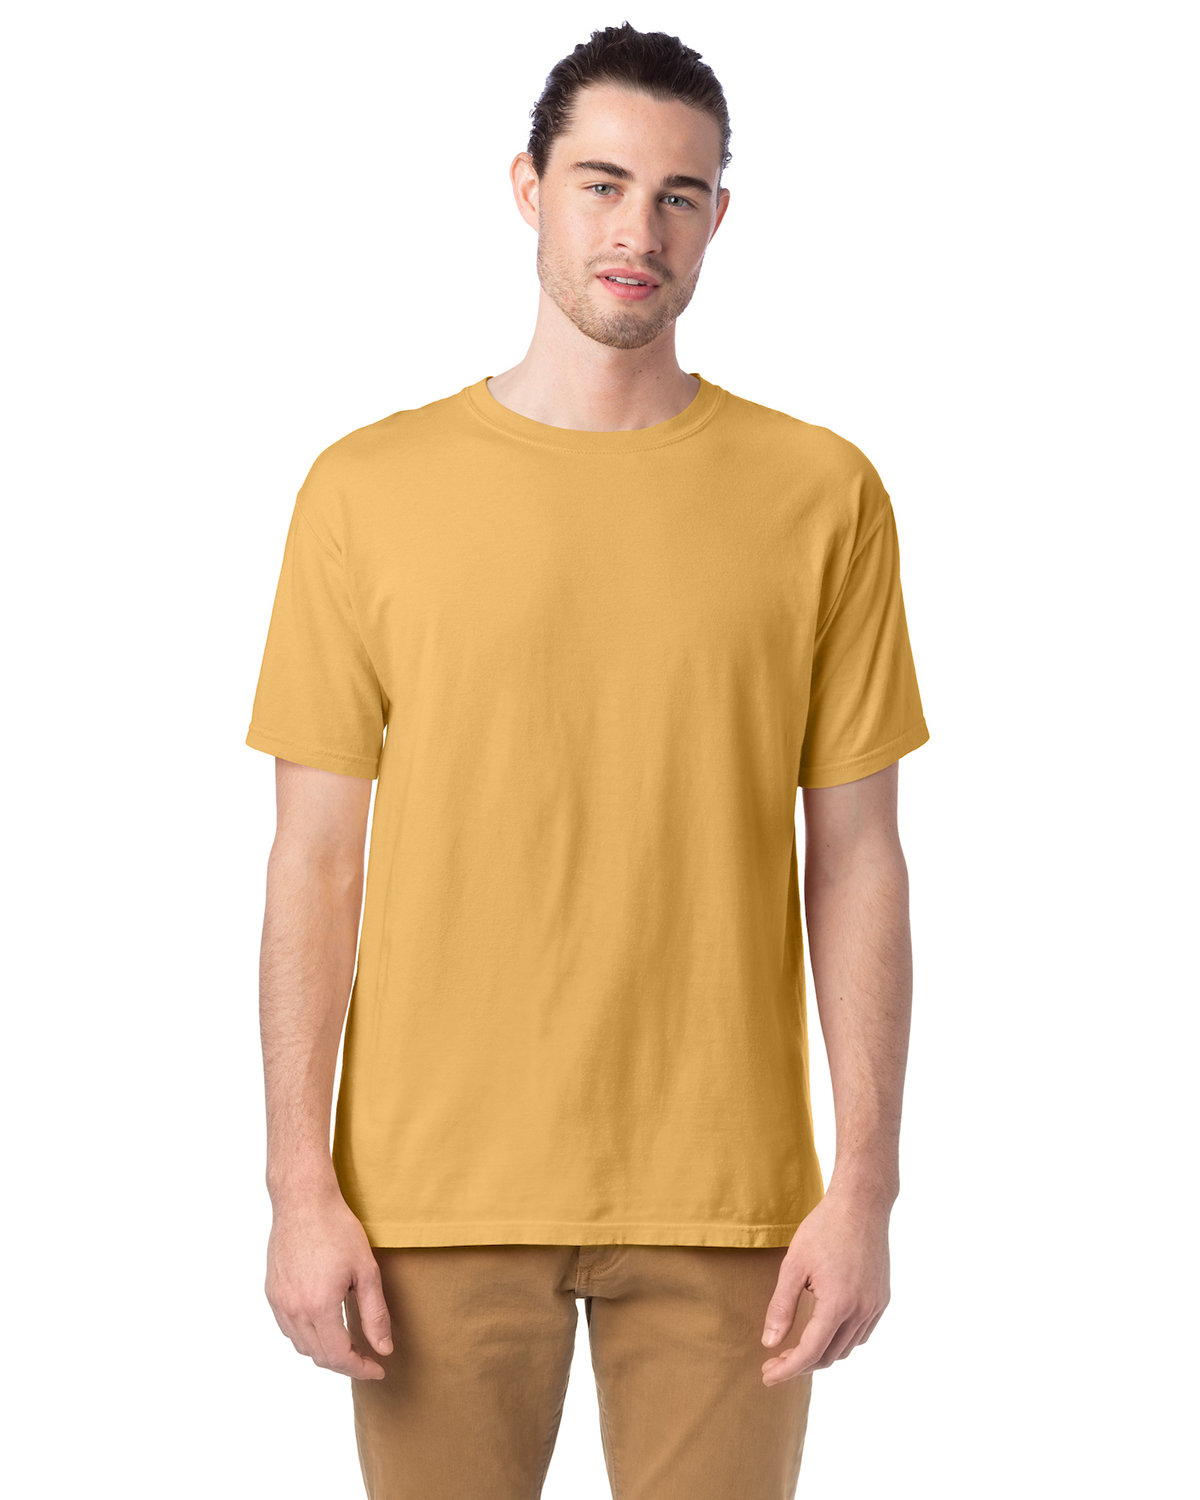 ComfortWash by Hanes Men's Garment-Dyed T-Shirt ARTISAN GOLD 